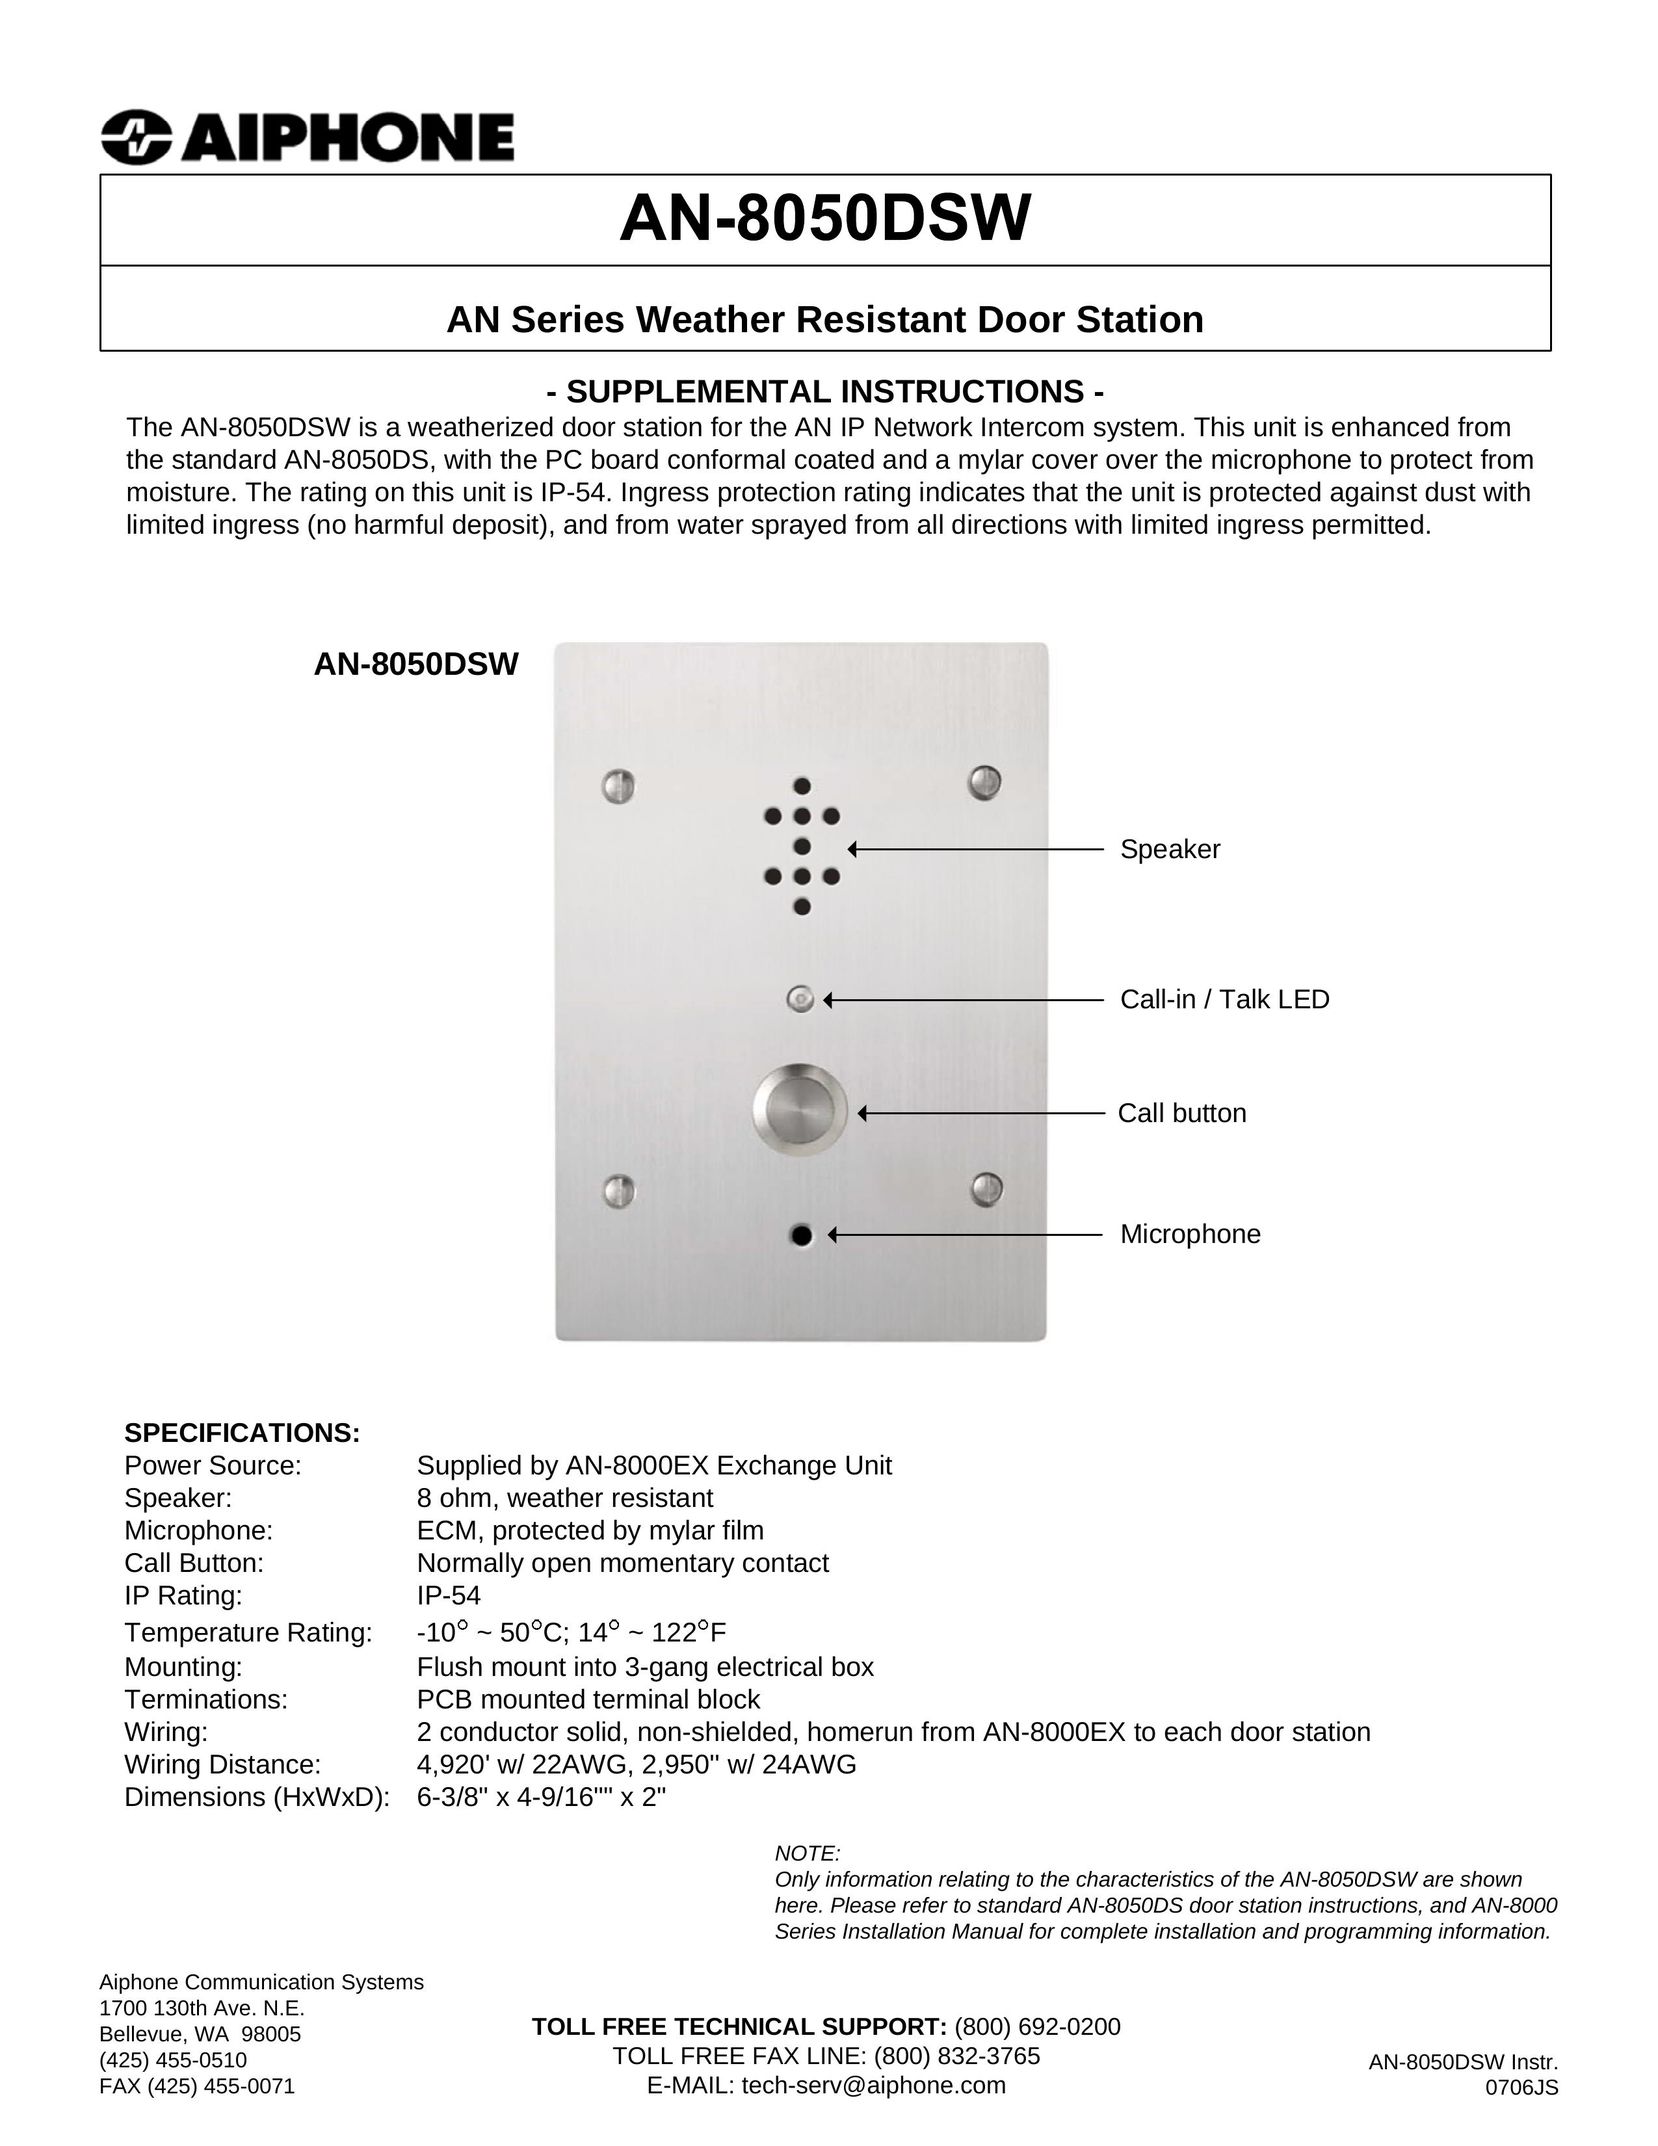 Aiphone AN-8050DSW Intercom System User Manual